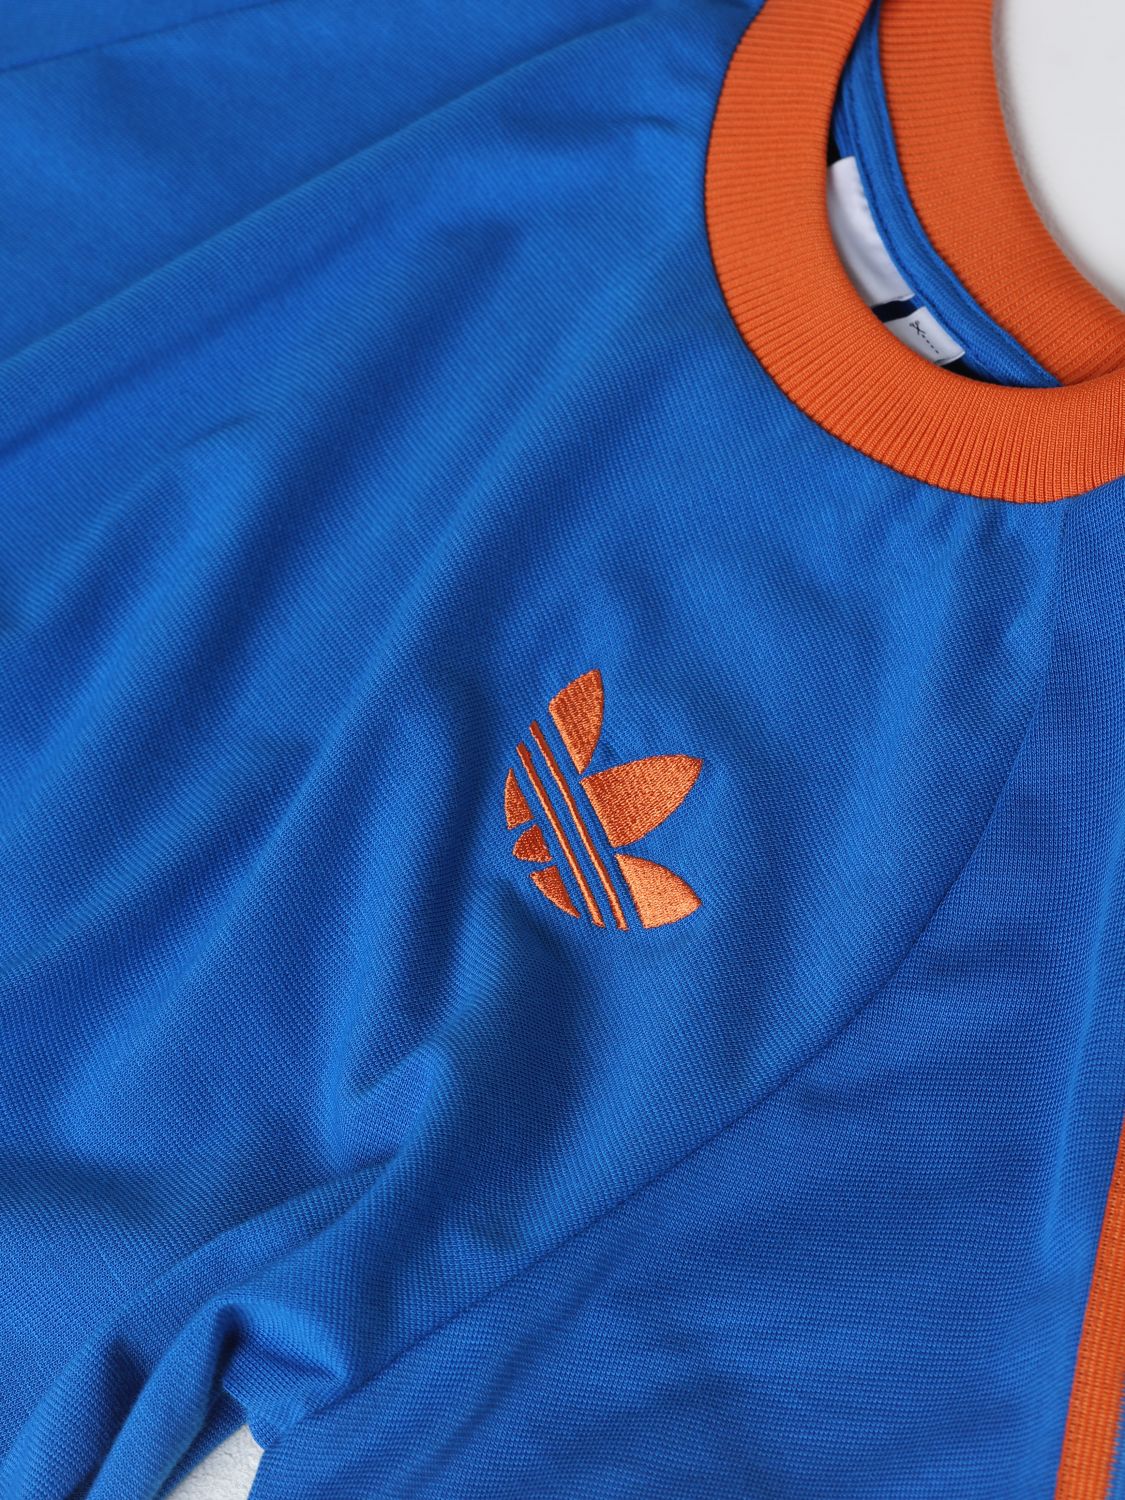 Adidas Originals Outlet: t-shirt for man - Blue | Adidas Originals t-shirt  IP6971 online at